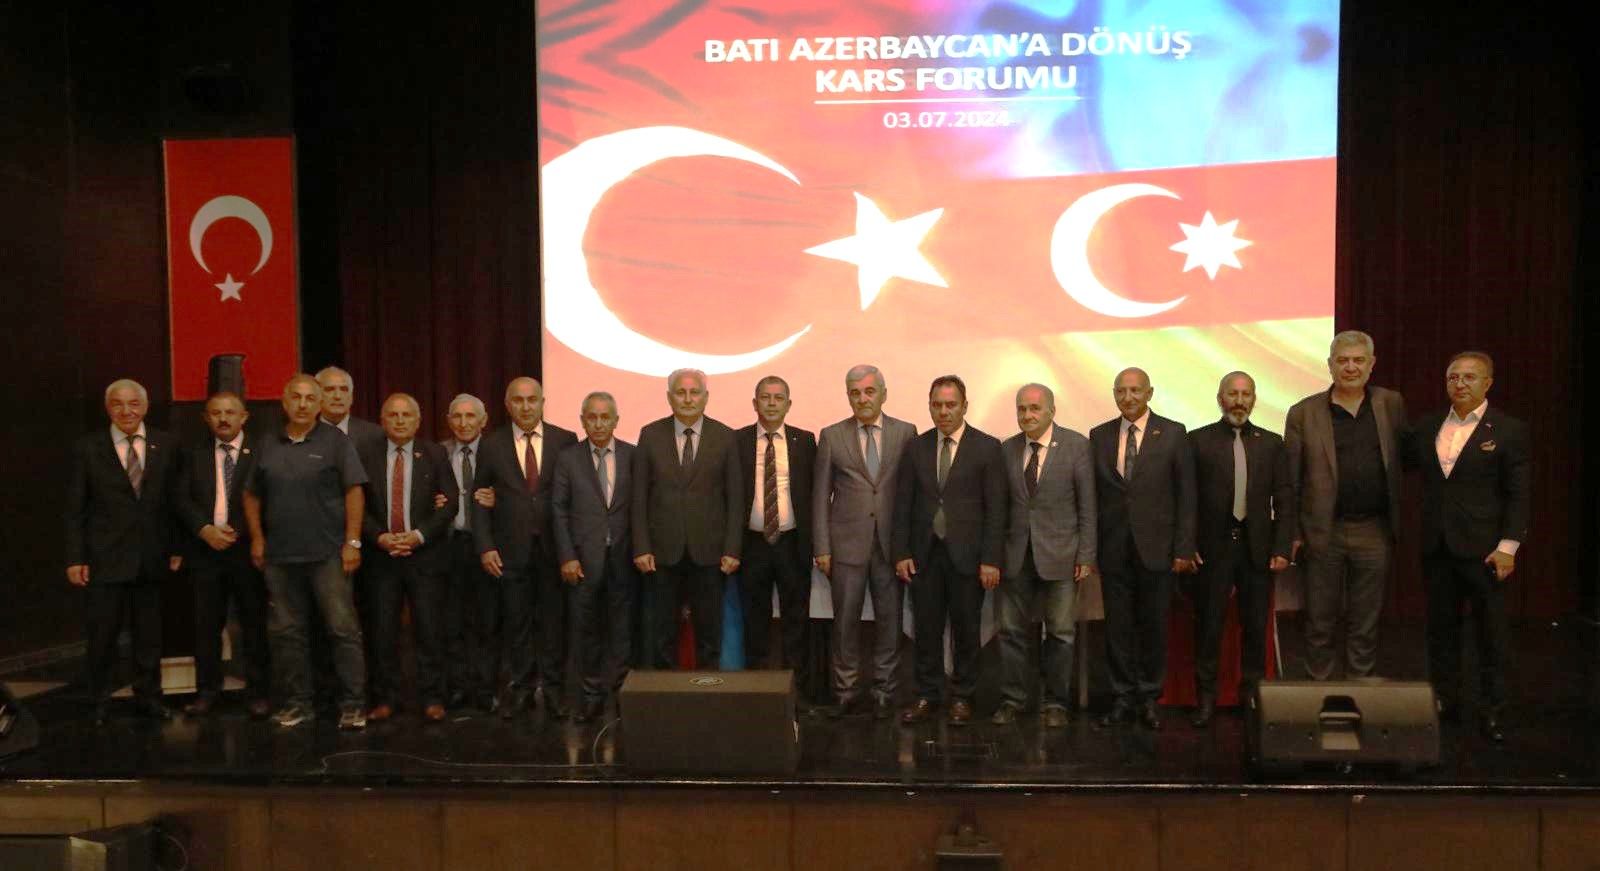 Kars hosted the “Return to West Azerbaijan” Forum